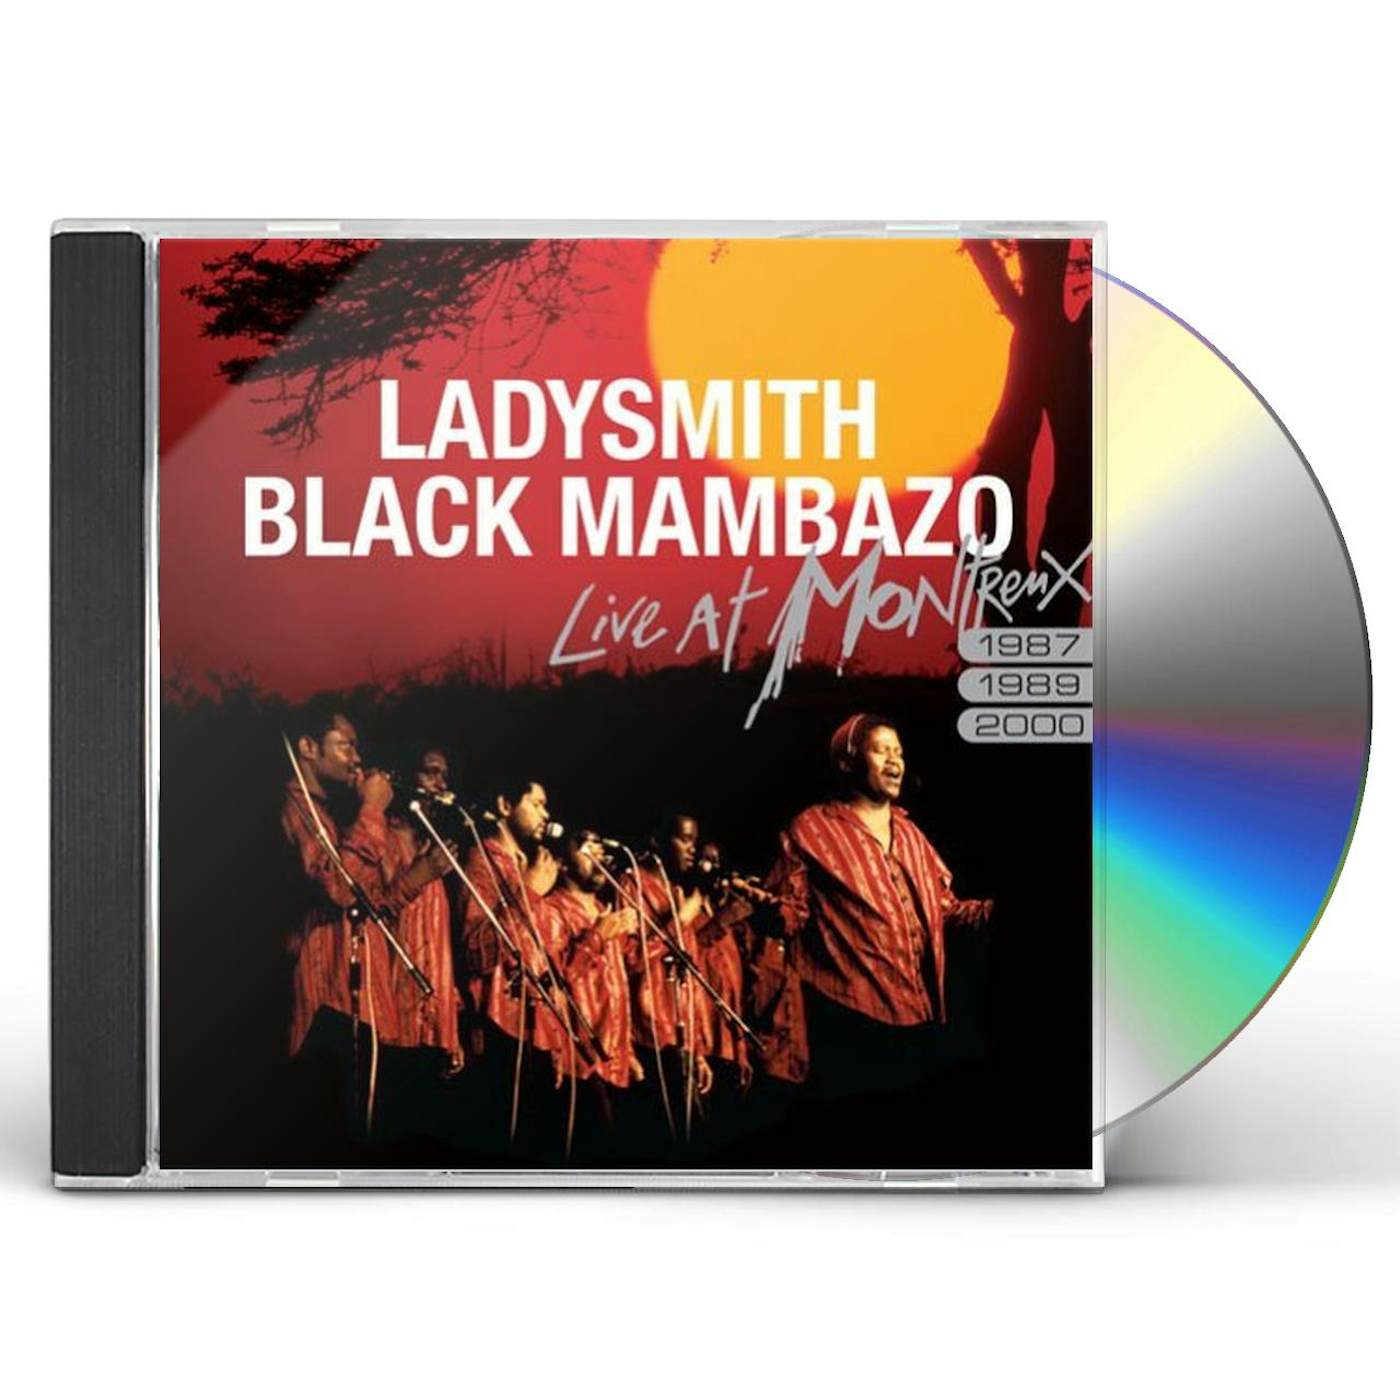 Ladysmith Black Mambazo LIVE AT MONTREUX 1987 1989 2000 CD